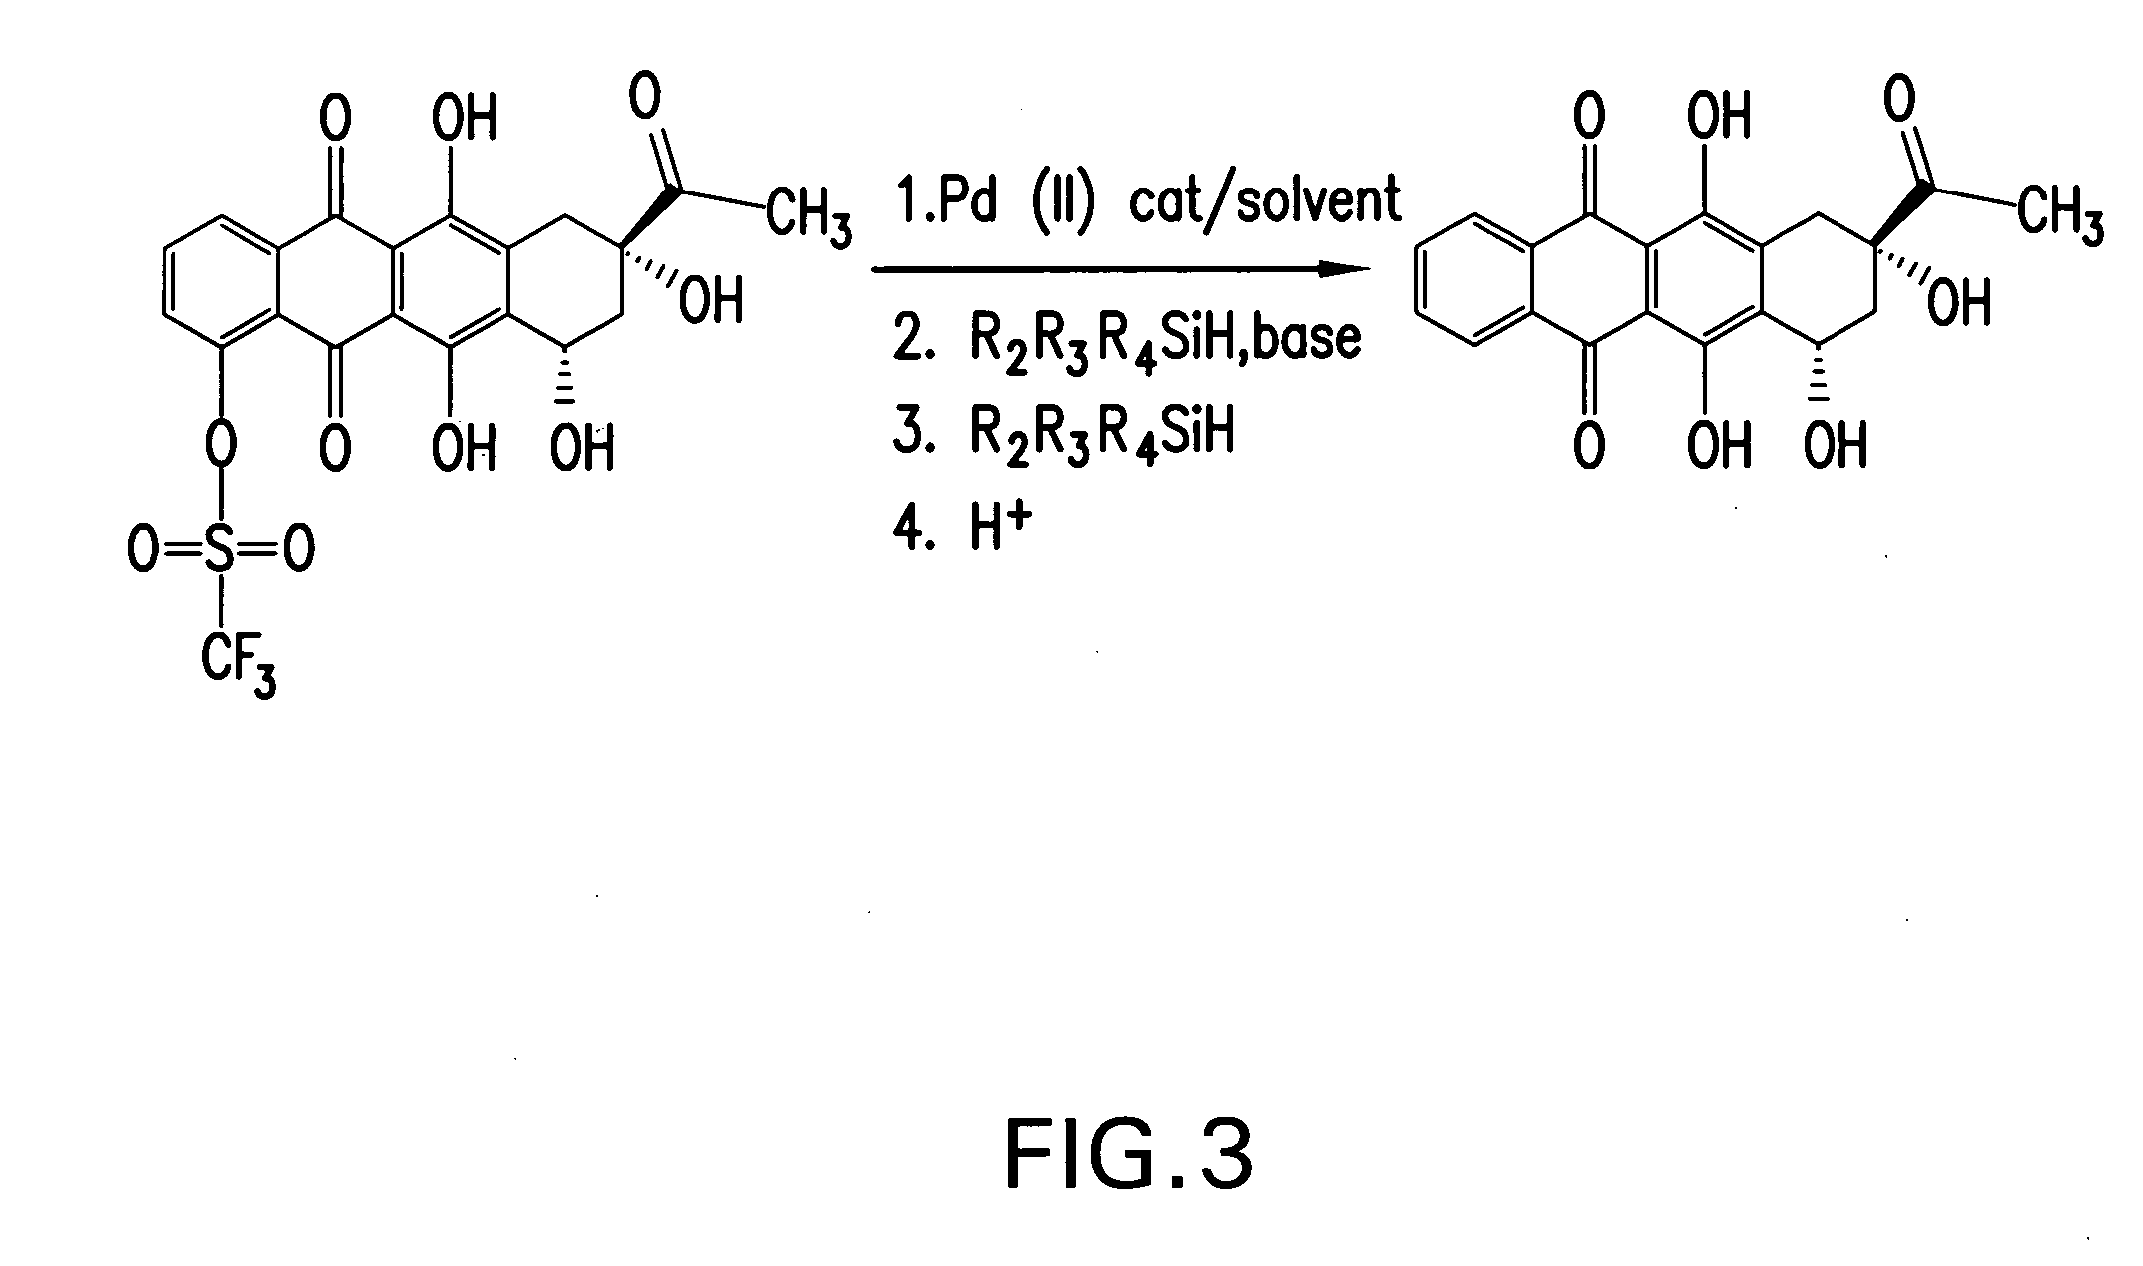 Synthesis of idarubicin aglycone